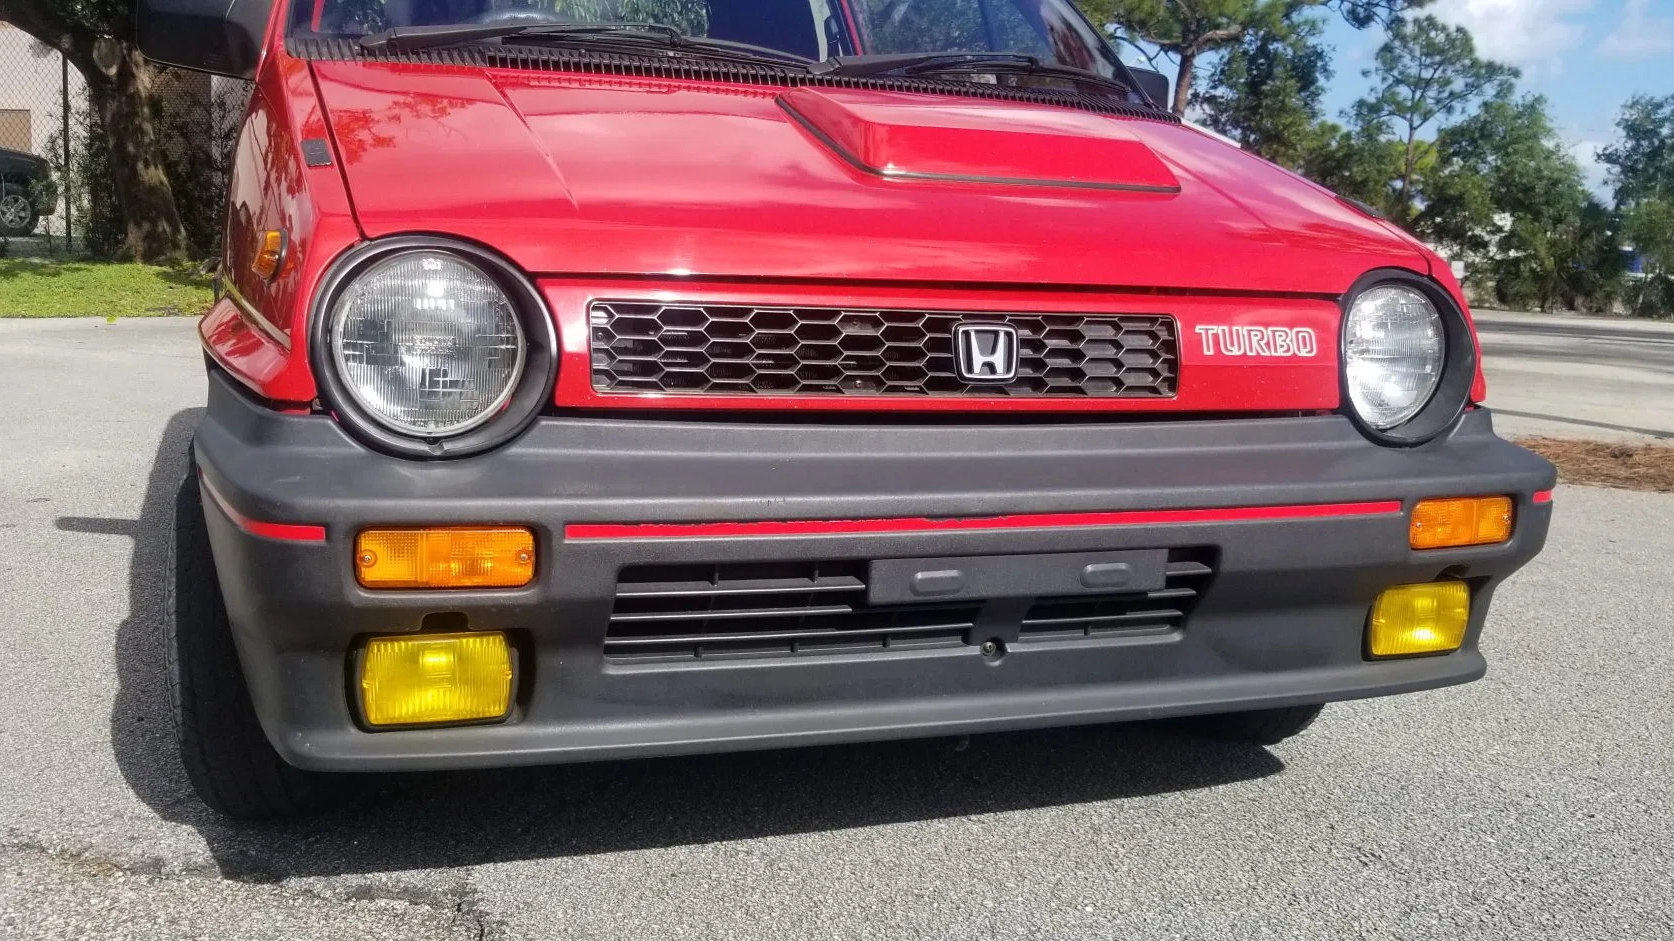 1983 Honda City Turbo front detail